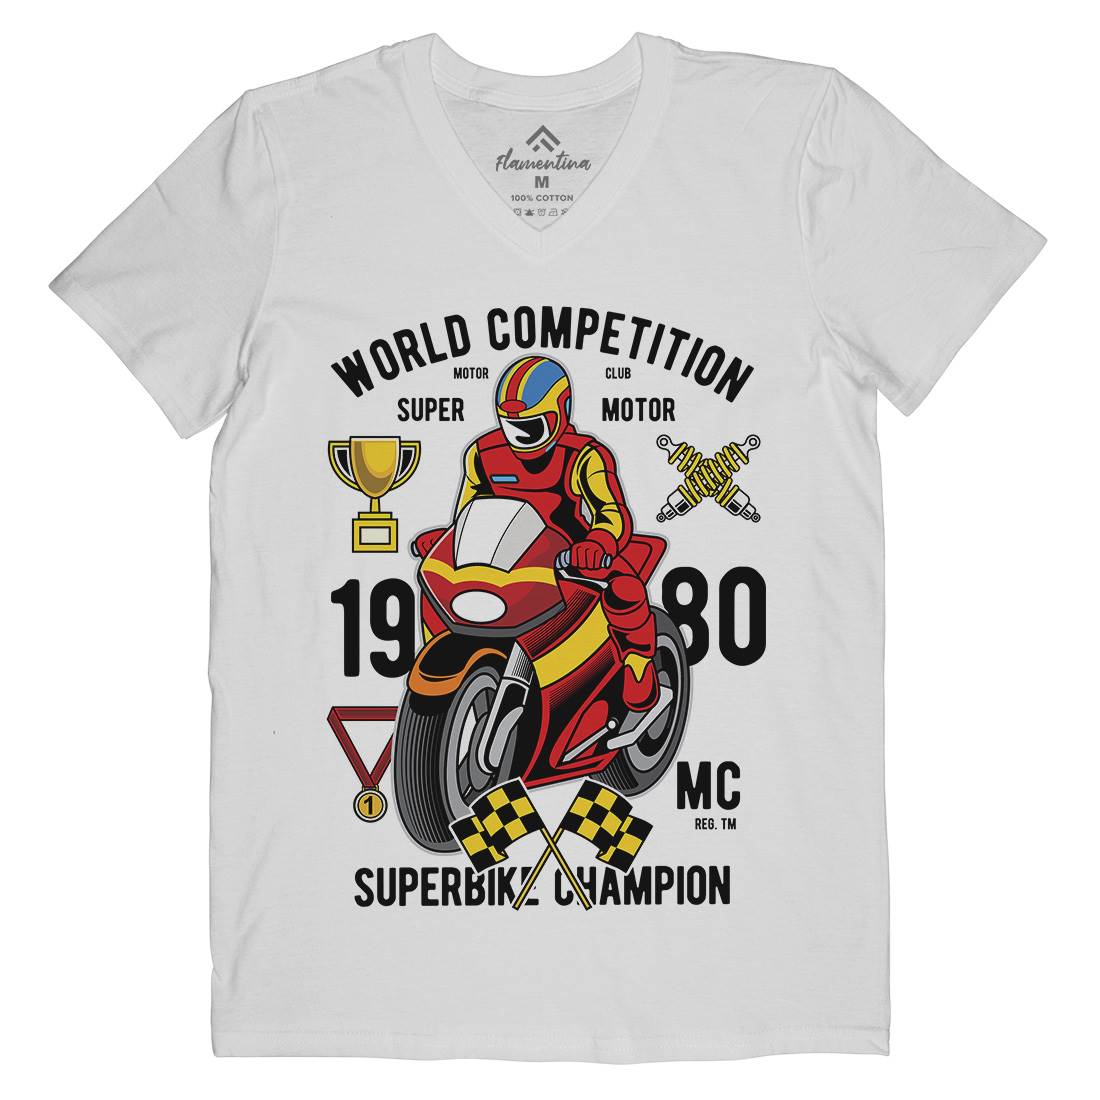 Super Bike World Competition Mens V-Neck T-Shirt Motorcycles C458